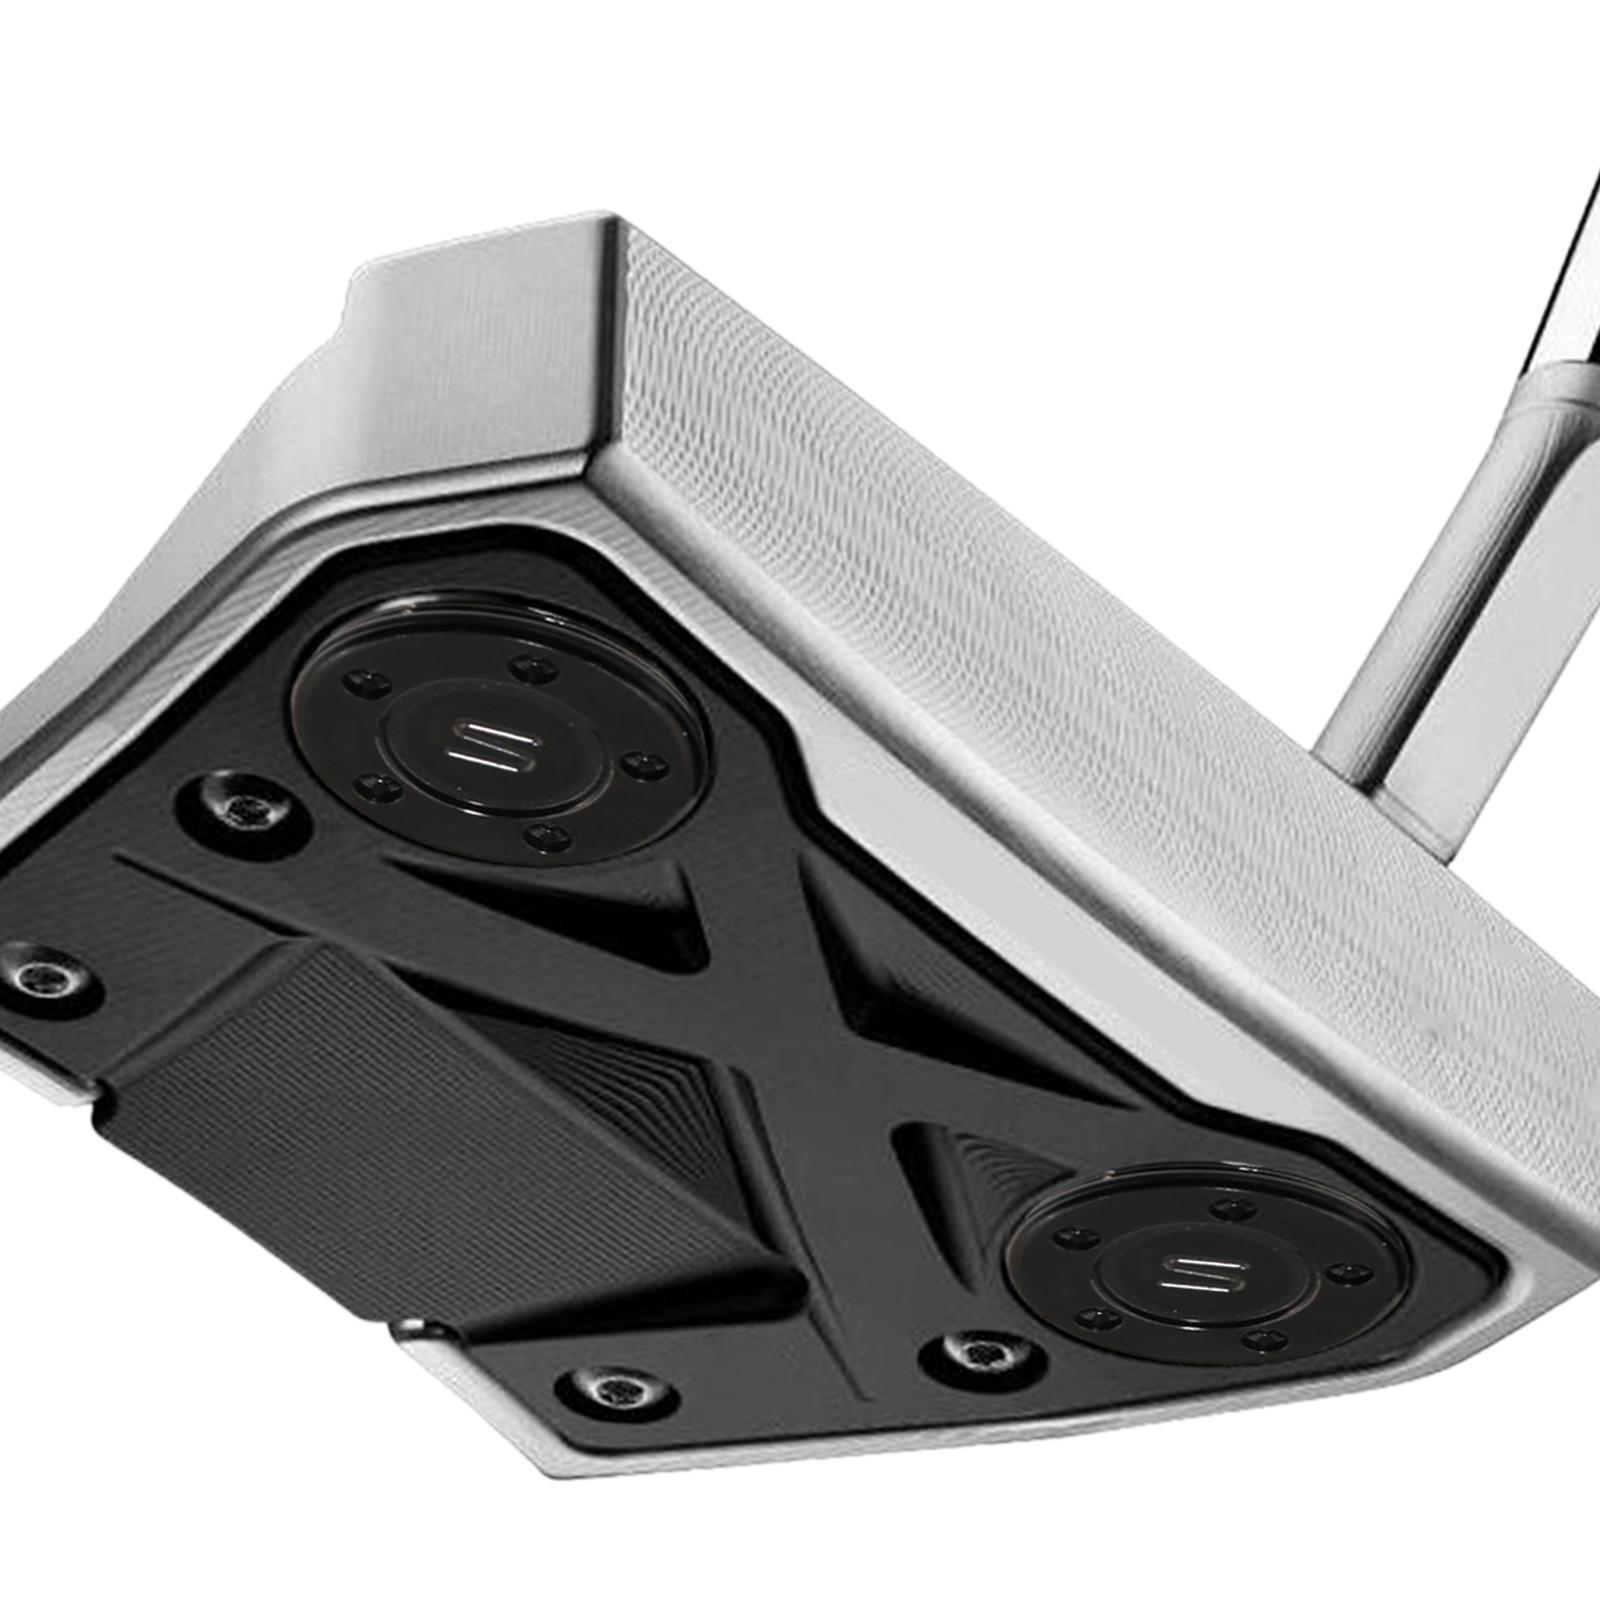 2Pcs Golf Custom Putter Weights Sturdy Accessories Black